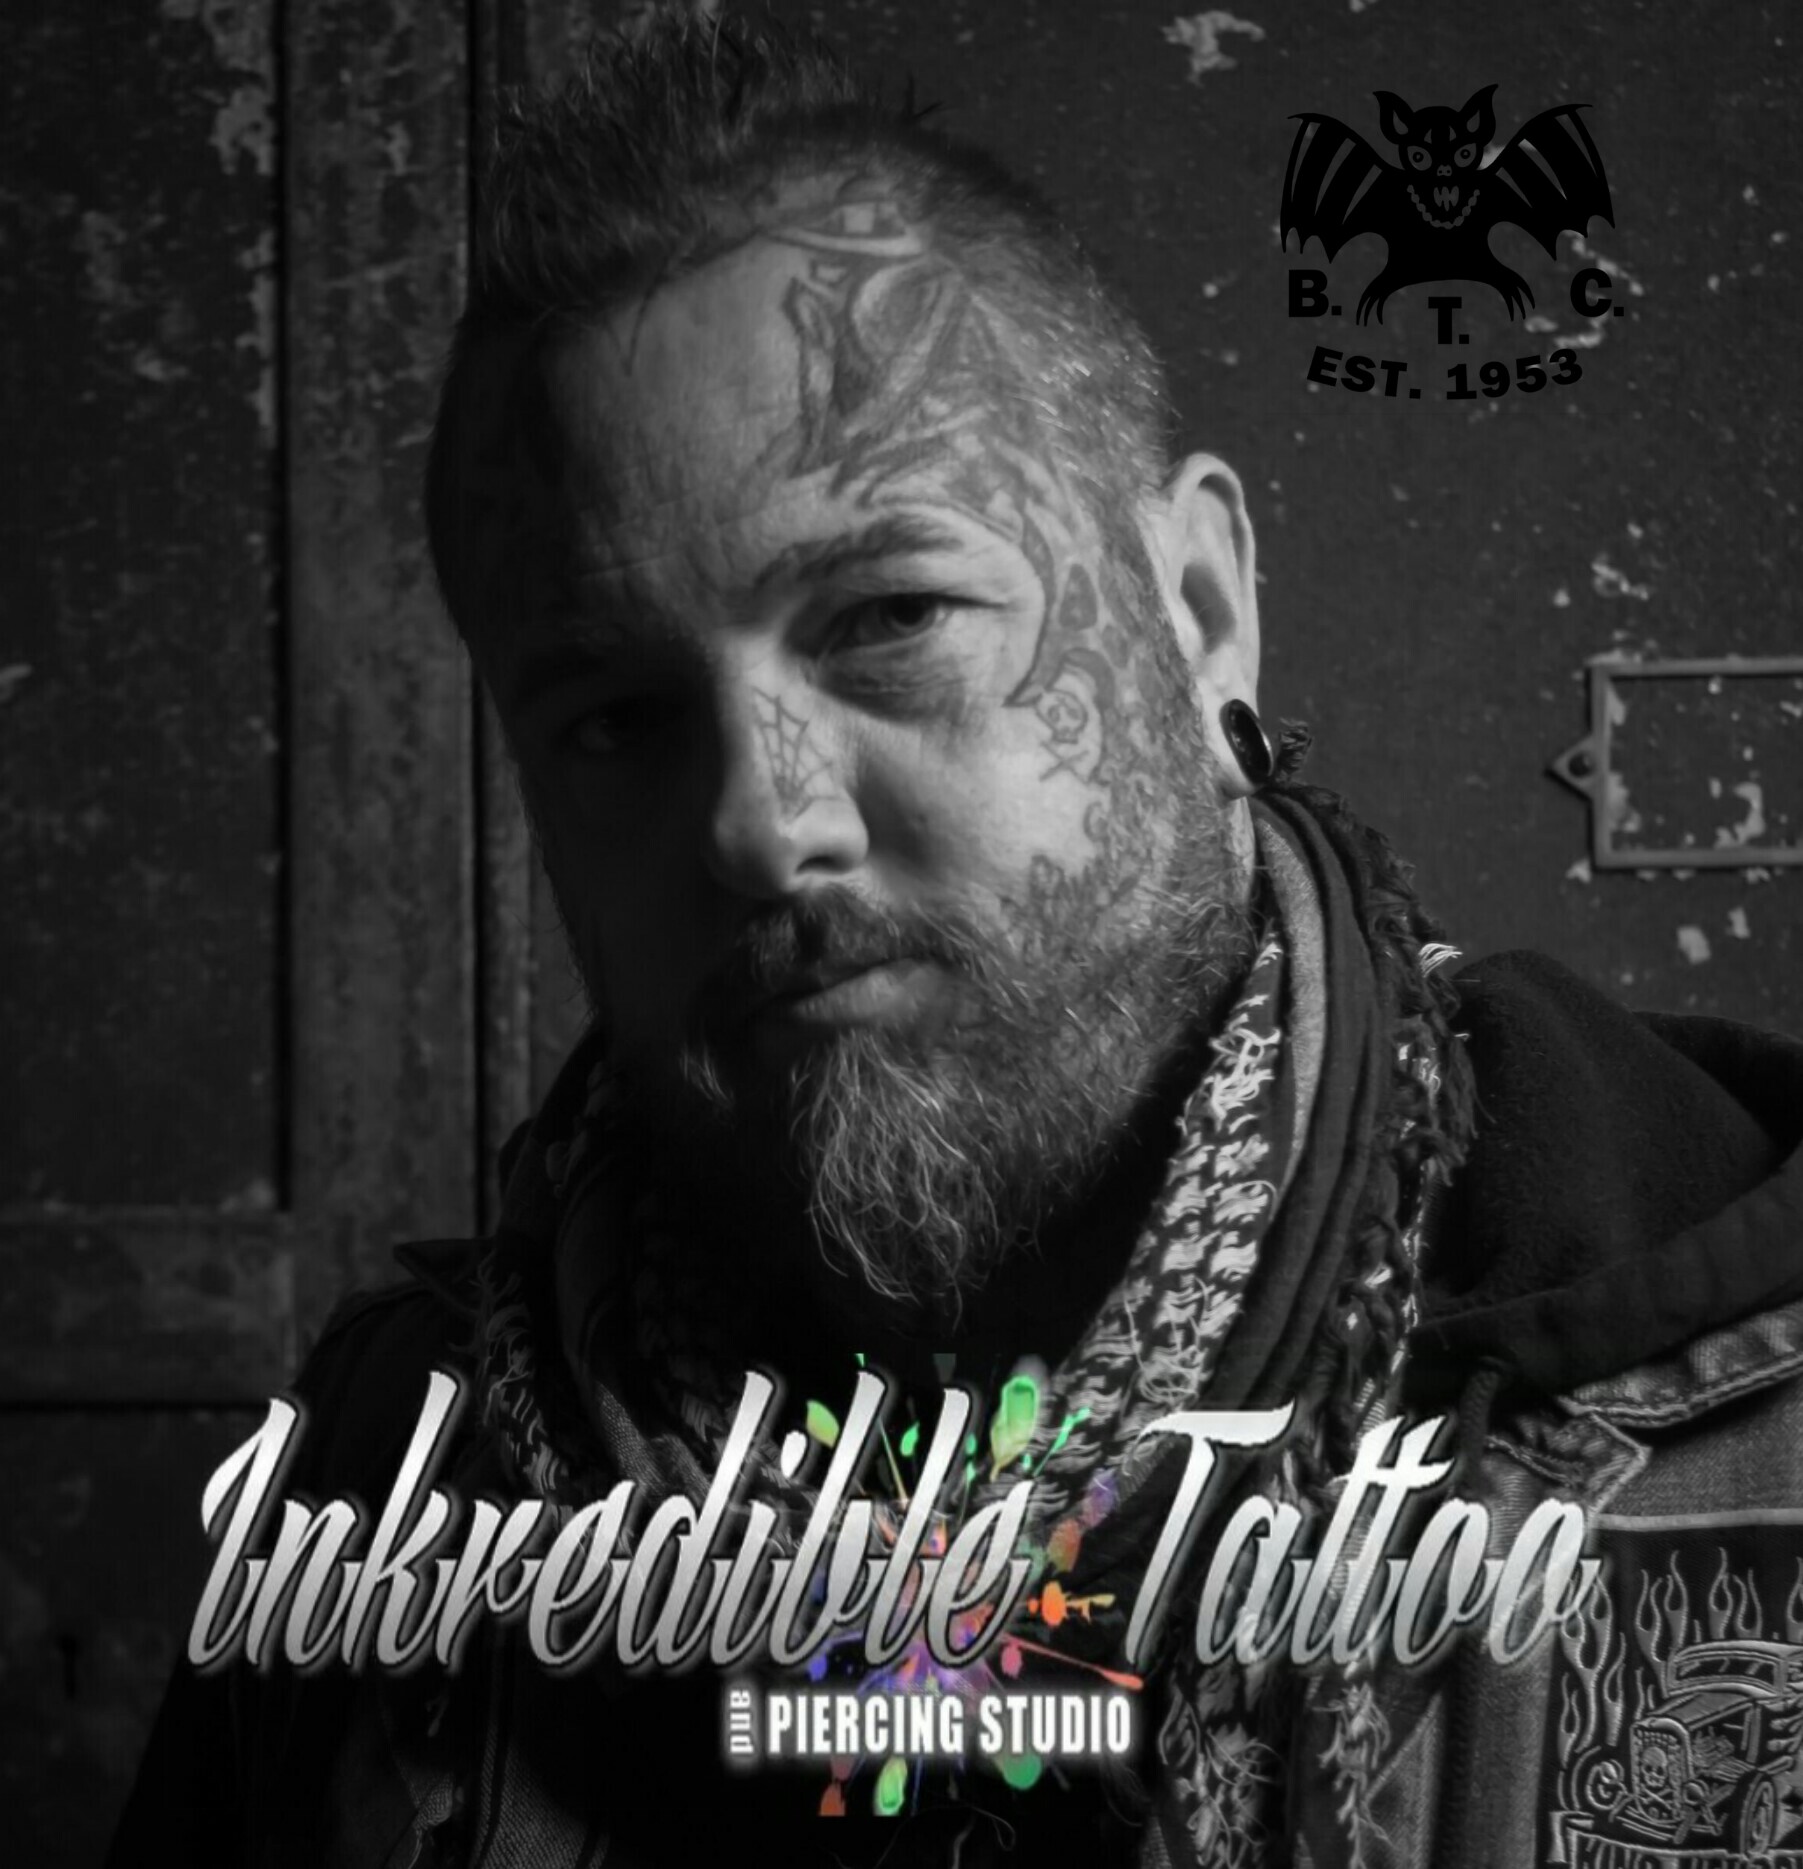 Inkredible Tattoo Artist Dean